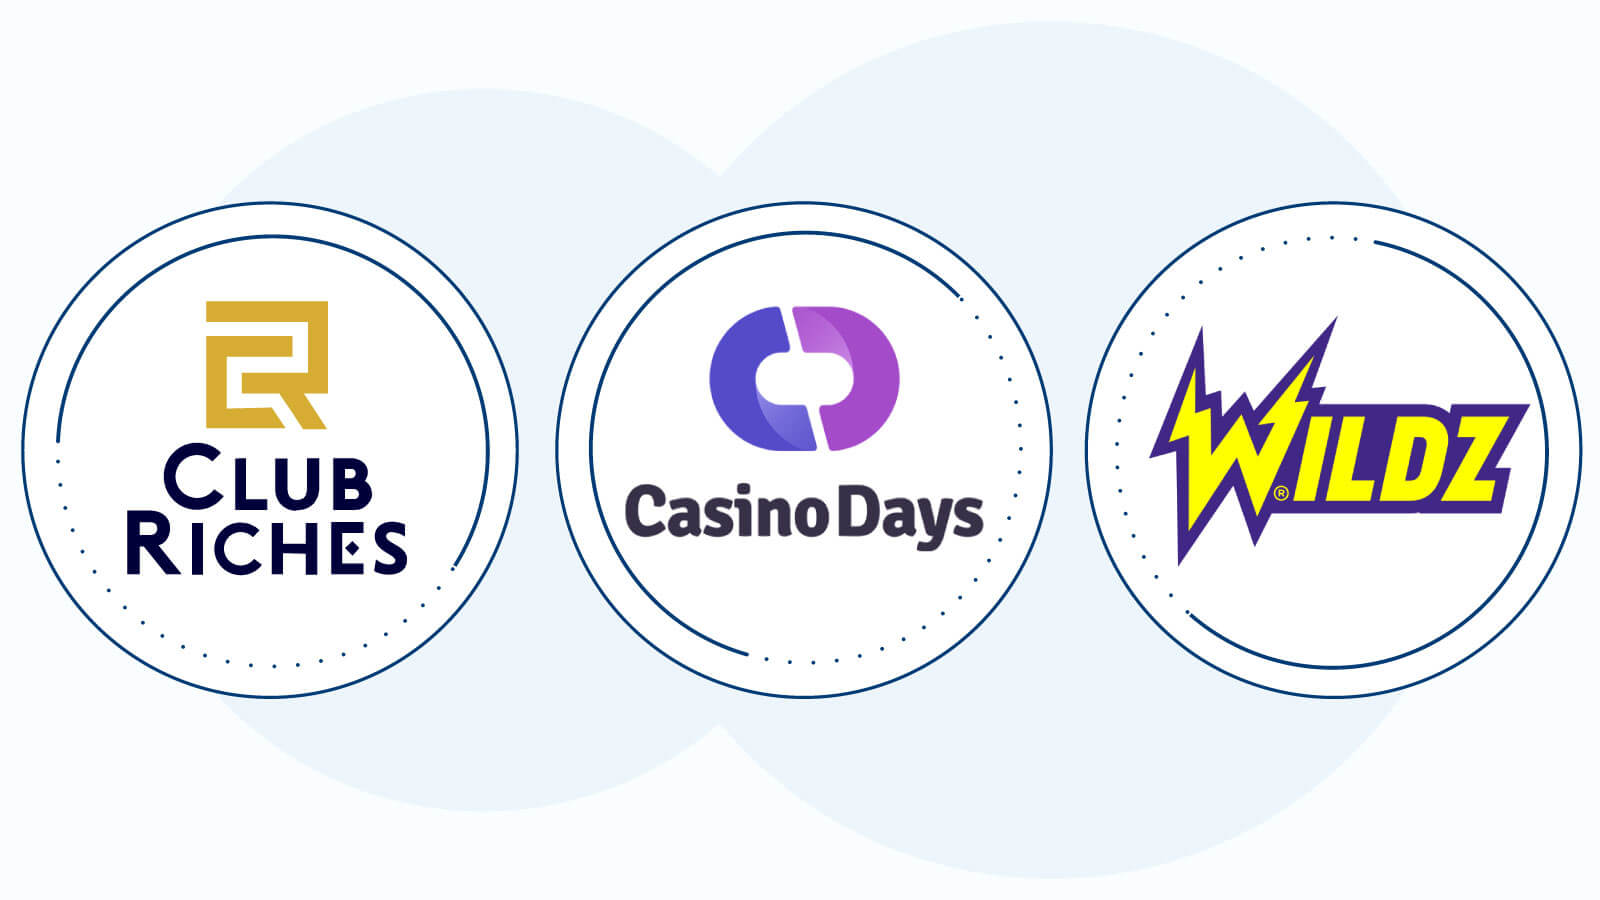 - Alternative Casinos for Deposit on Starburst Free Spins Bonuses